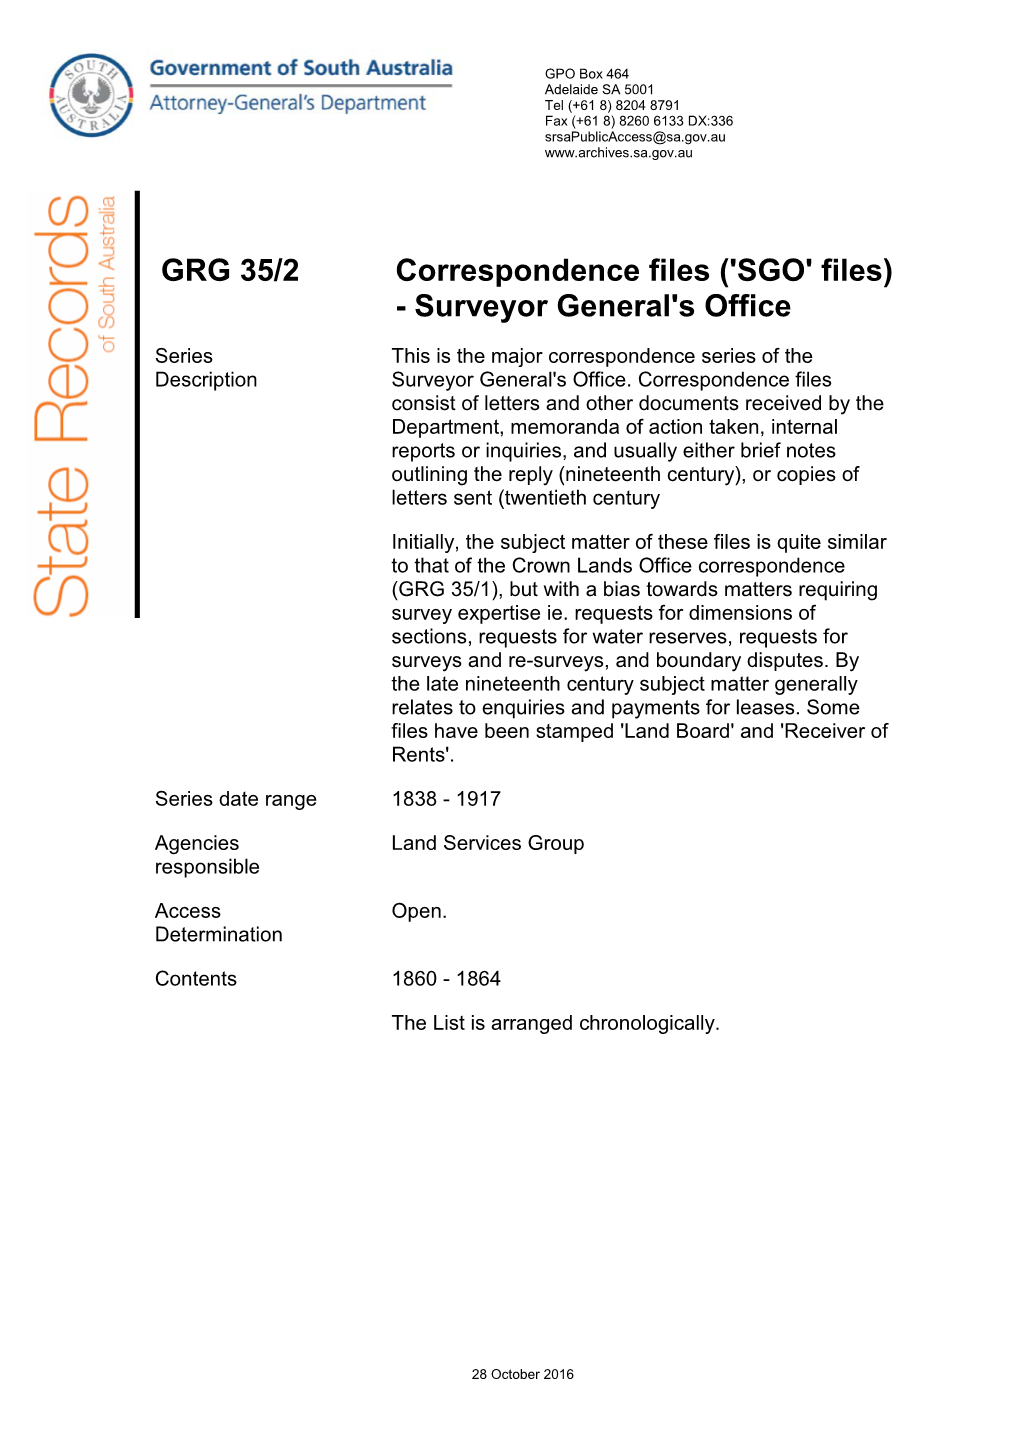 GRG 35/2 Correspondence Files ('SGO' Files) - Surveyor General's Office